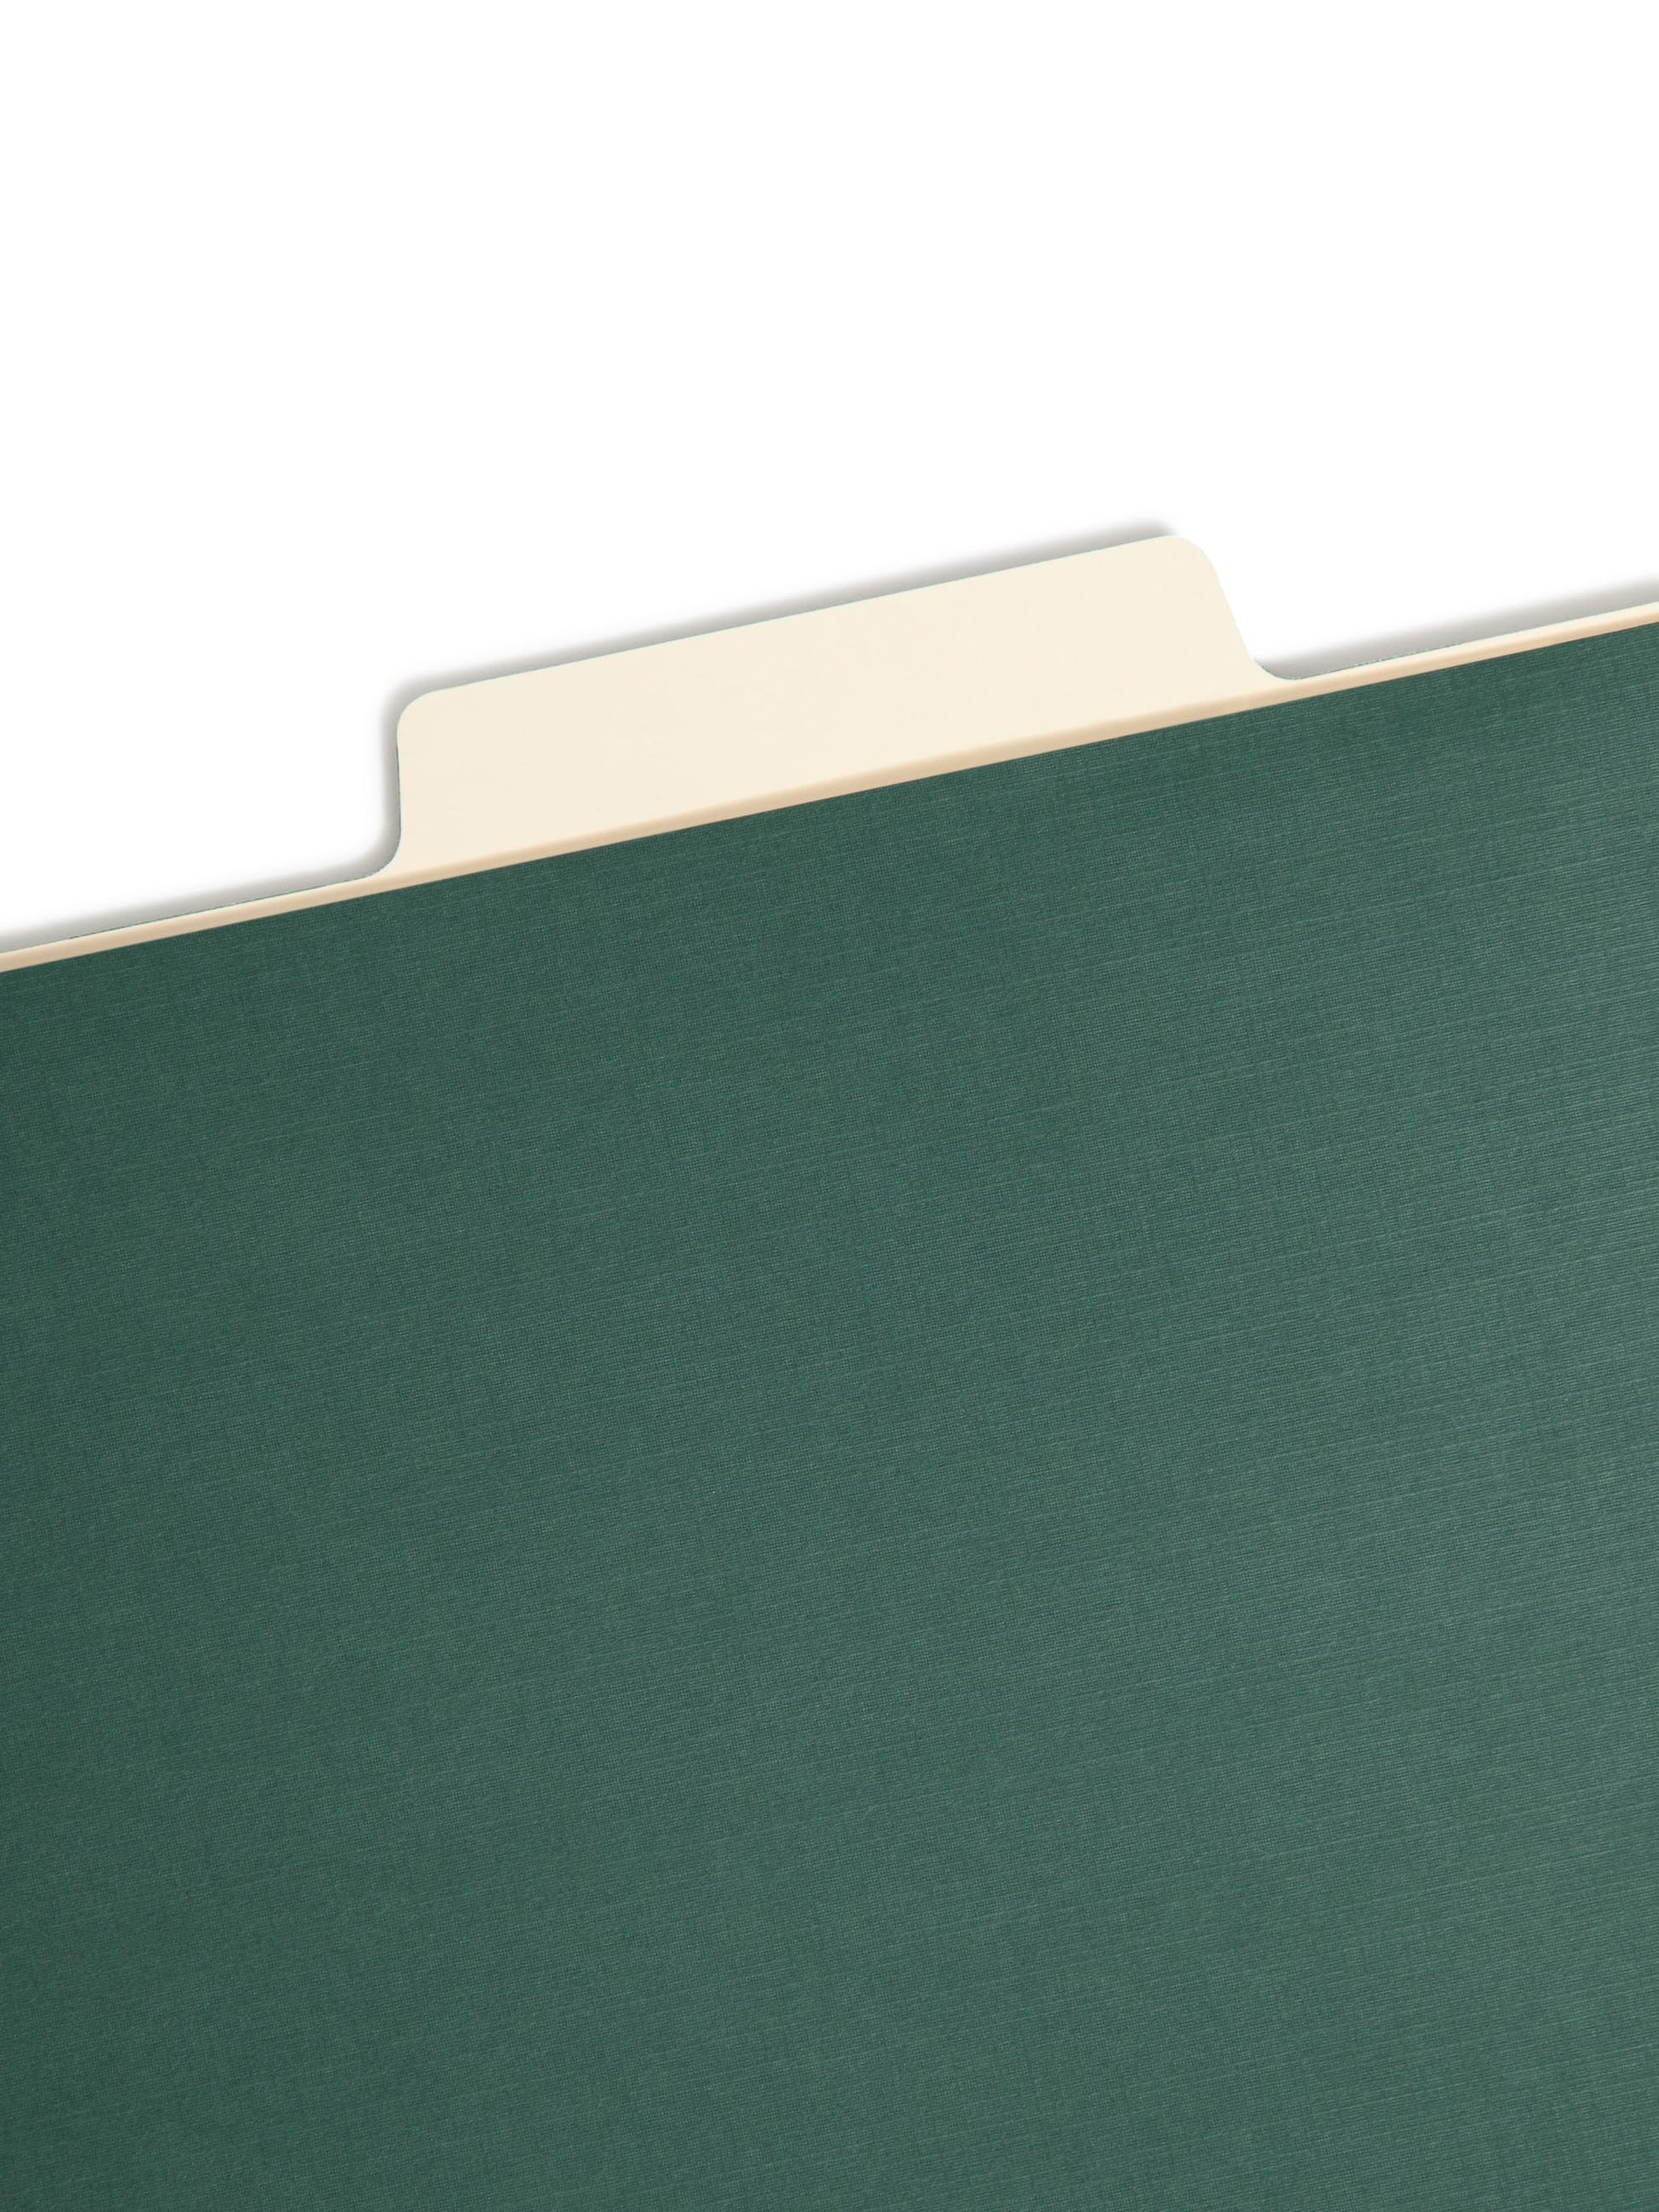 SuperTab® Classification File Folders, Dark Green Color, Letter Size, 